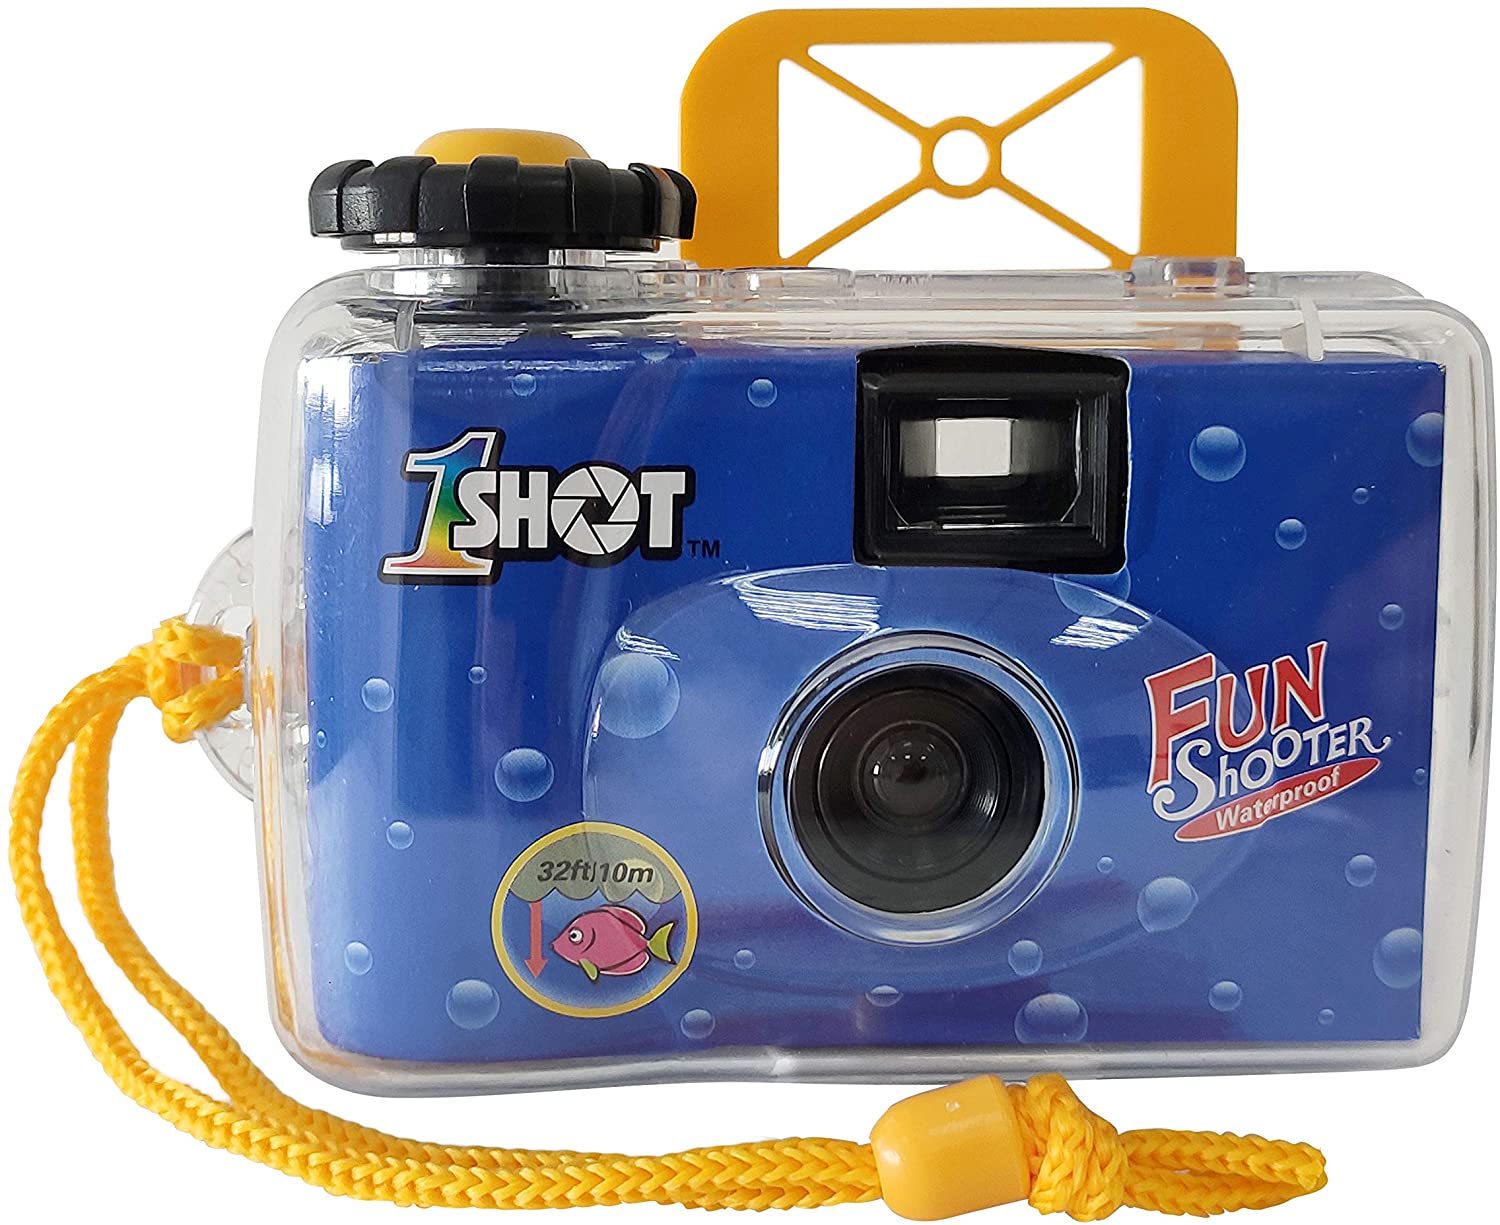 1shot waterproof disposable camera